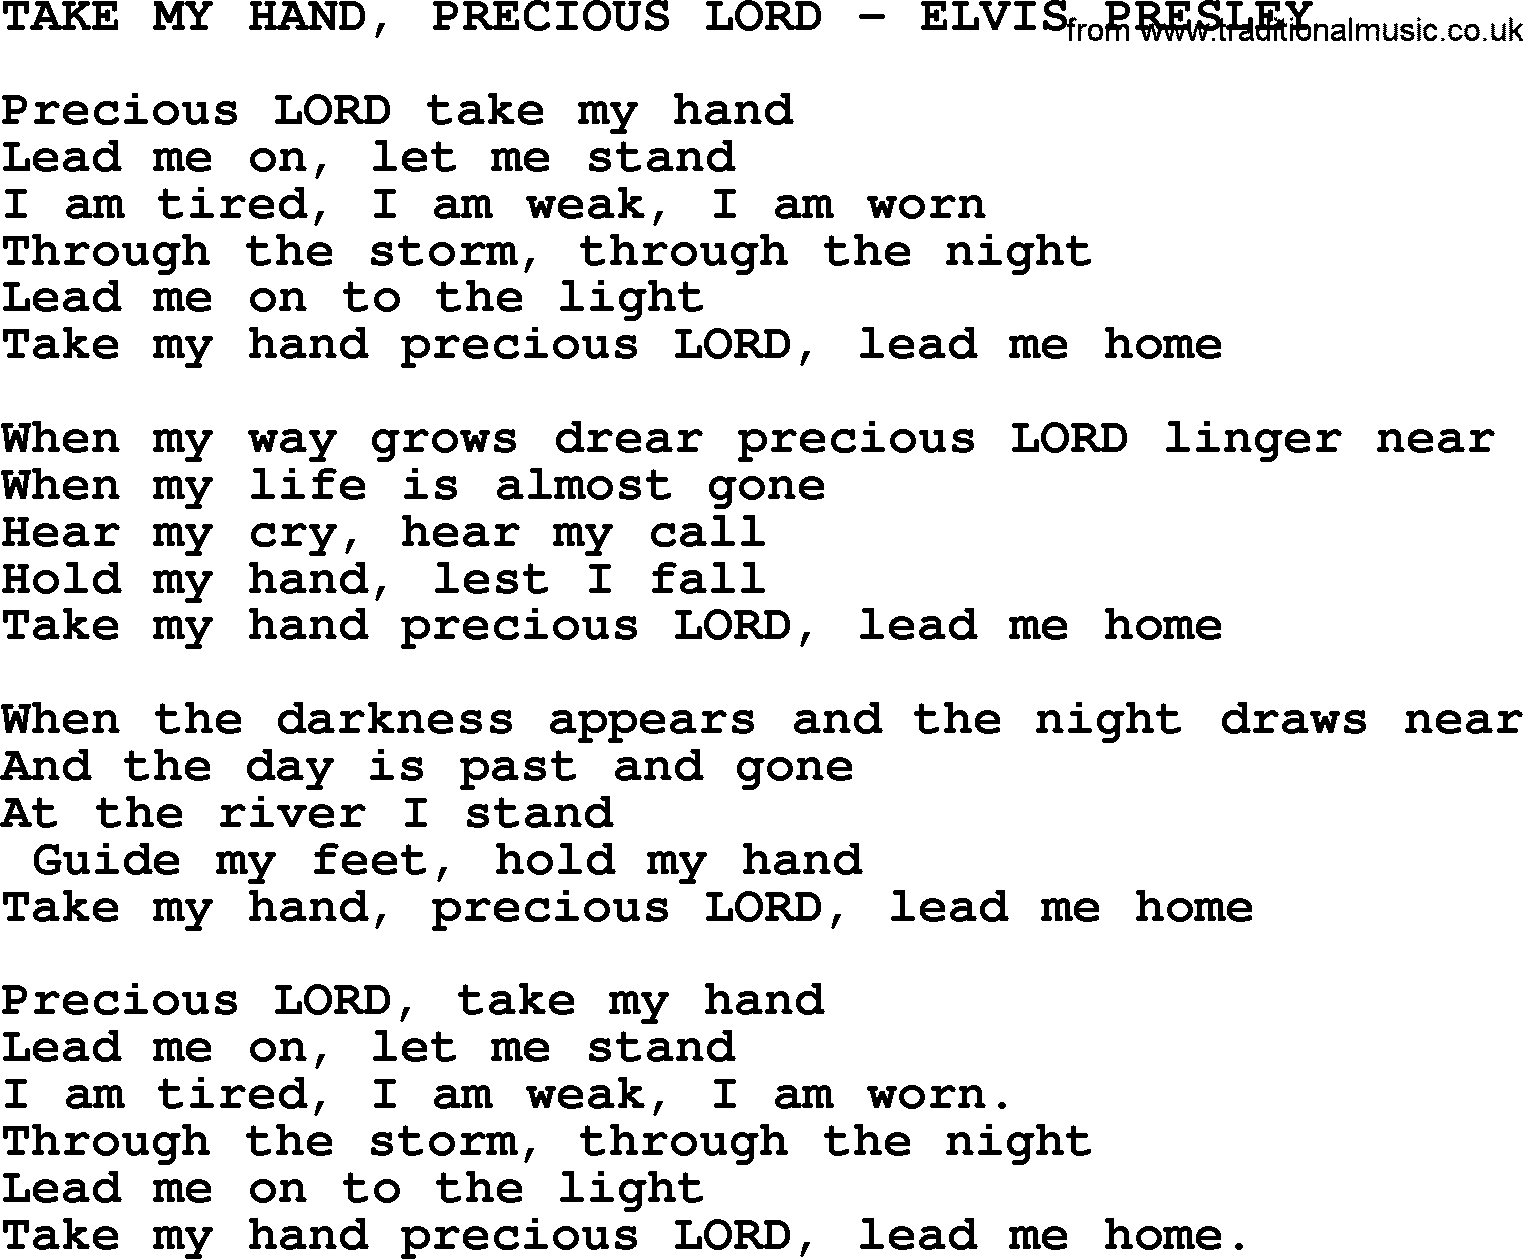 Elvis Presley song: Take My Hand, Precious Lord-Elvis Presley-.txt lyrics and chords